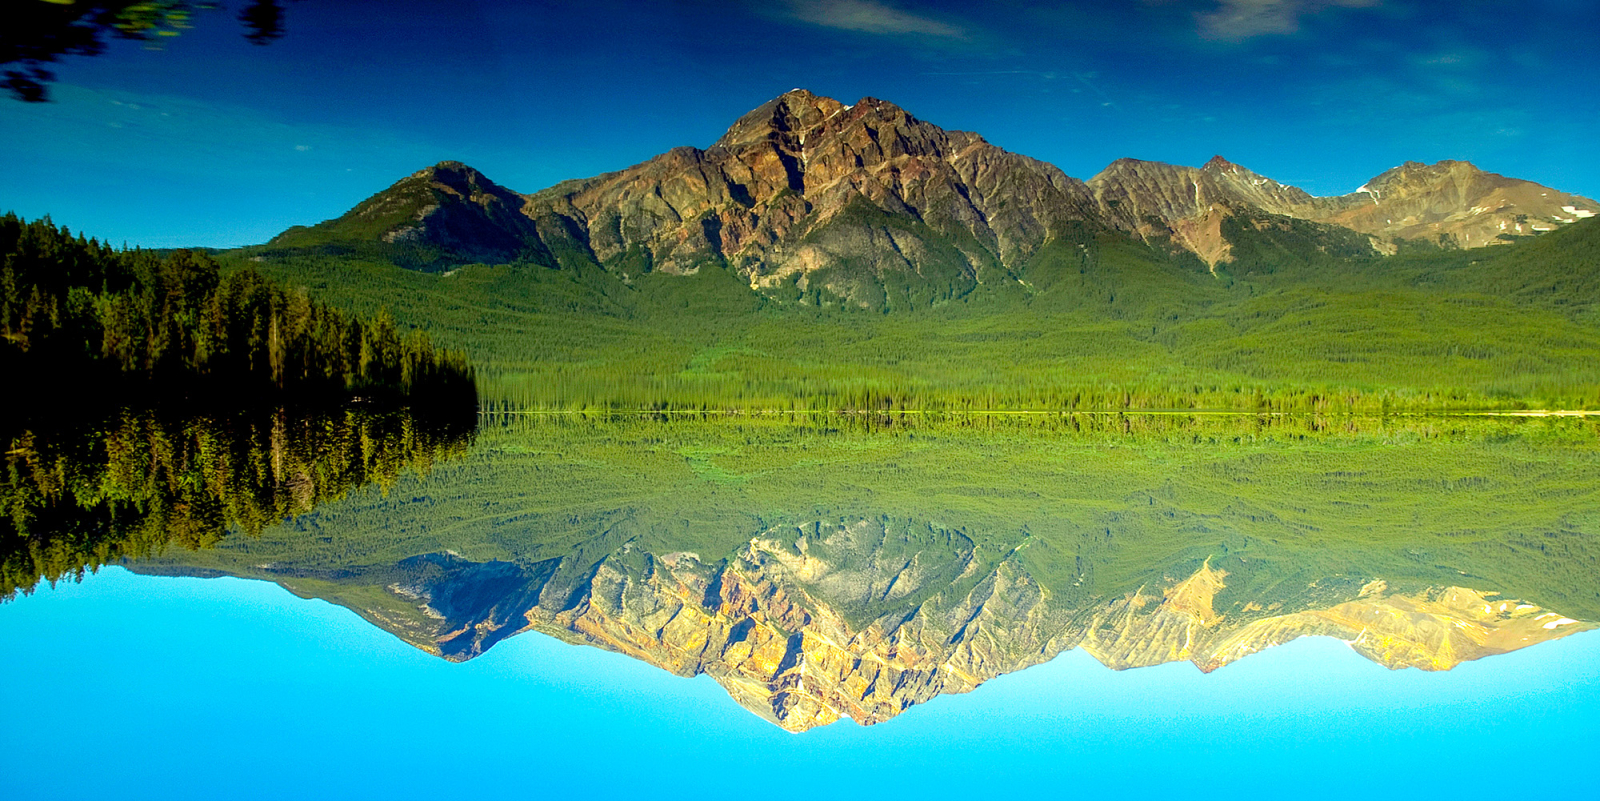 Reflective lake scene